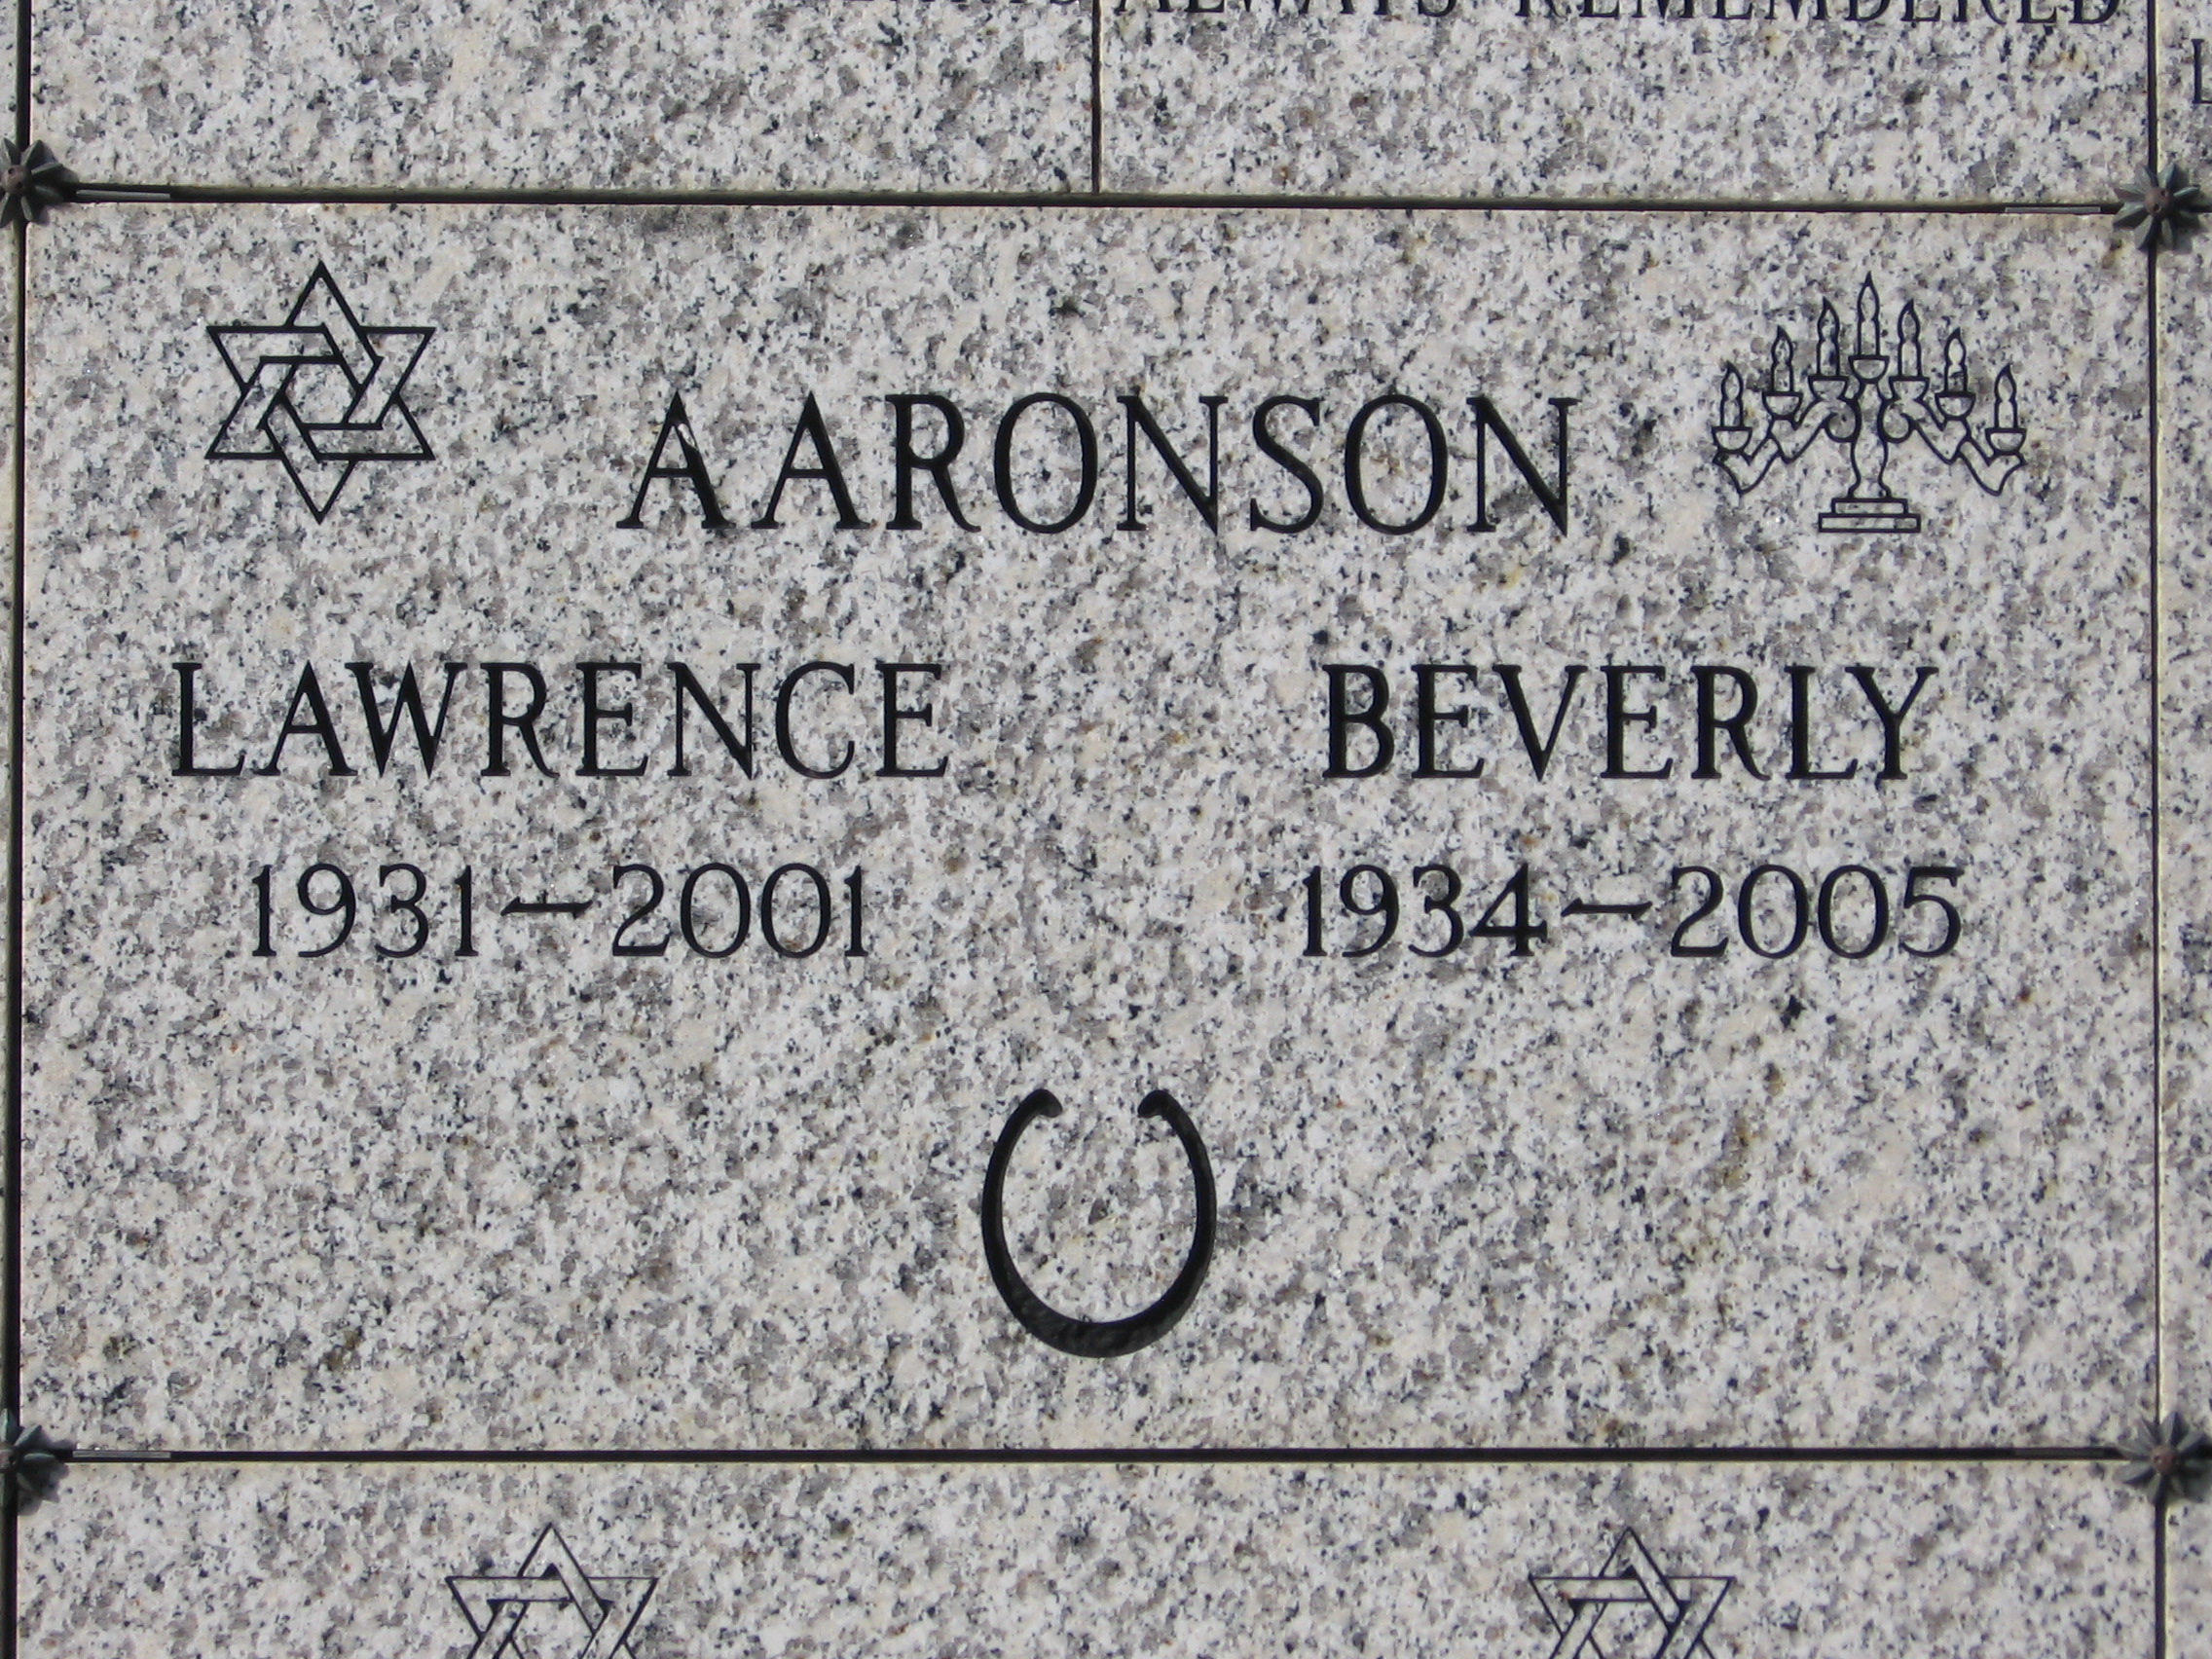 Beverly Aaronson